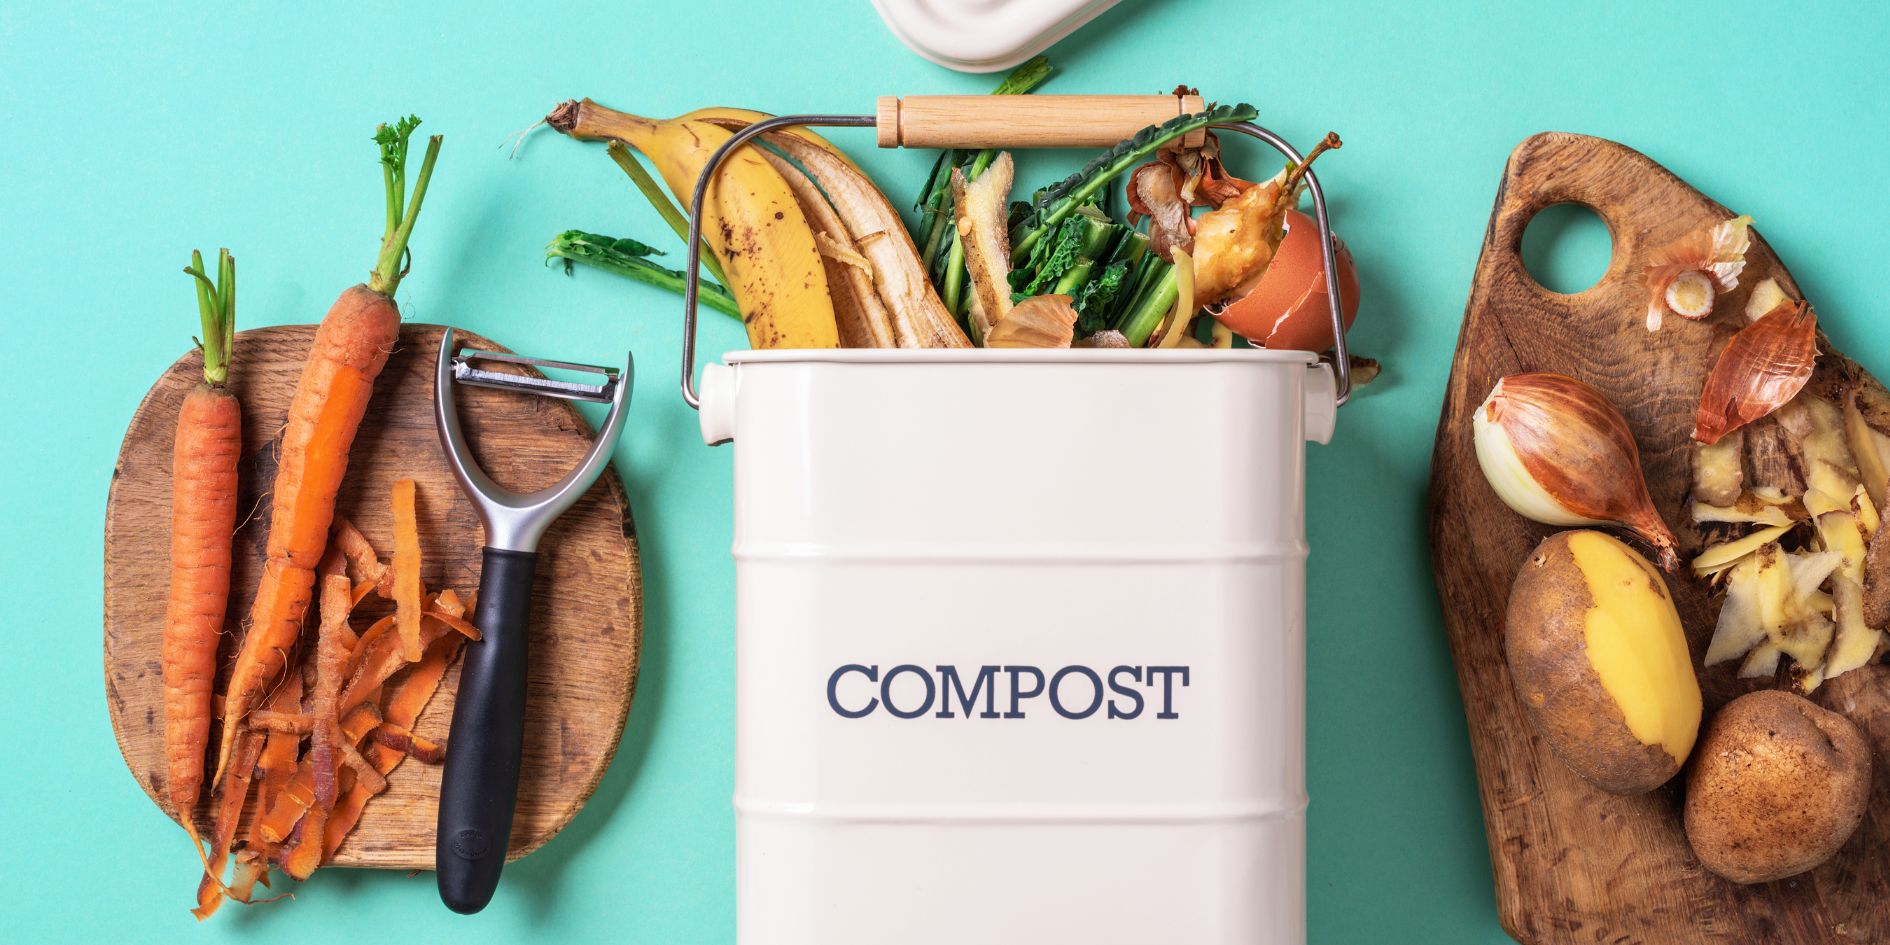 MABLE Compost Blog Post